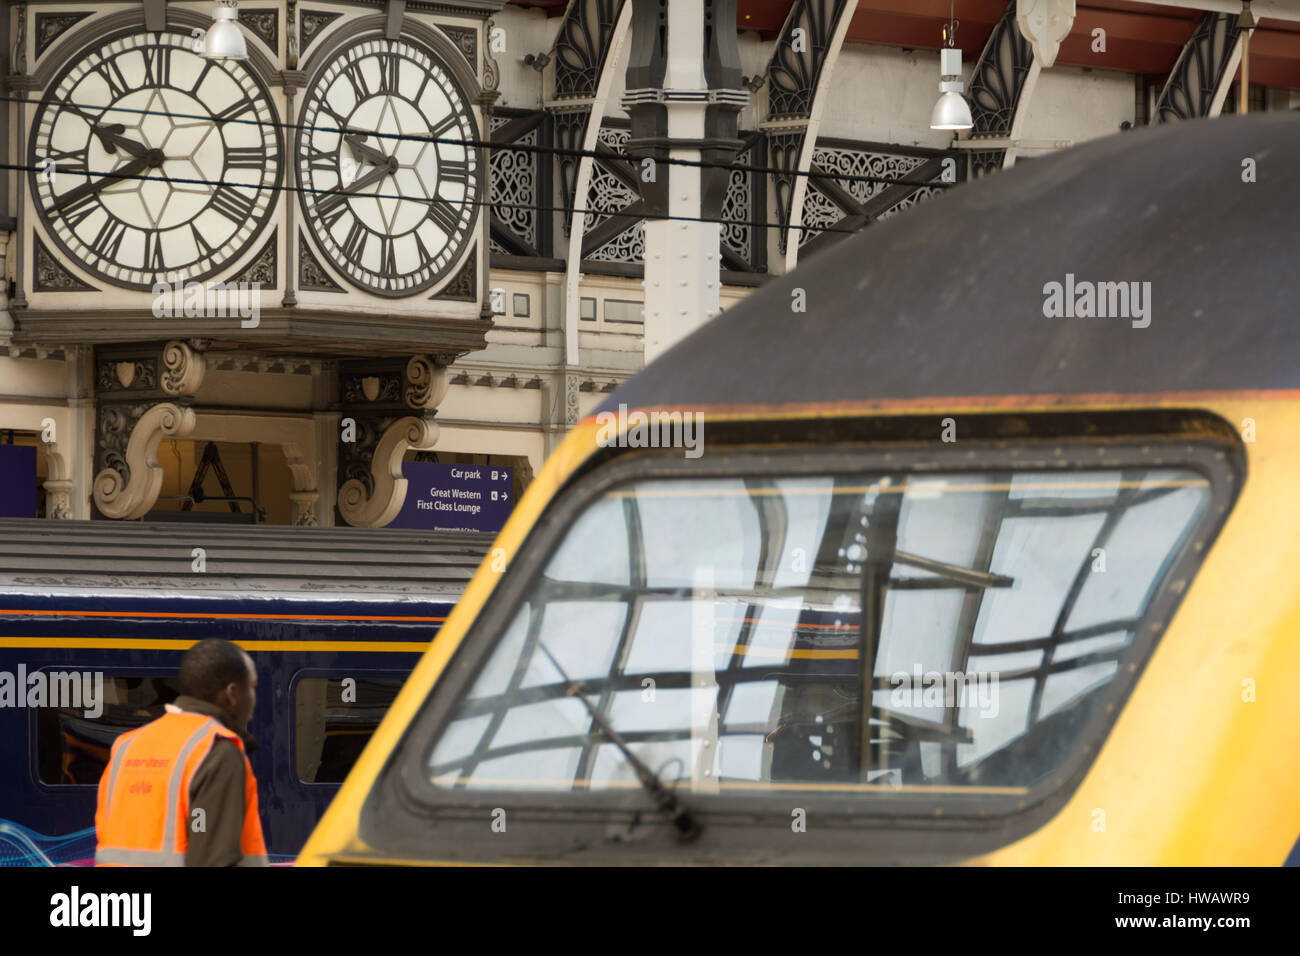 Great Western Railway HST trains waiting to depart at Paddington Station, London, UK Stock Photo